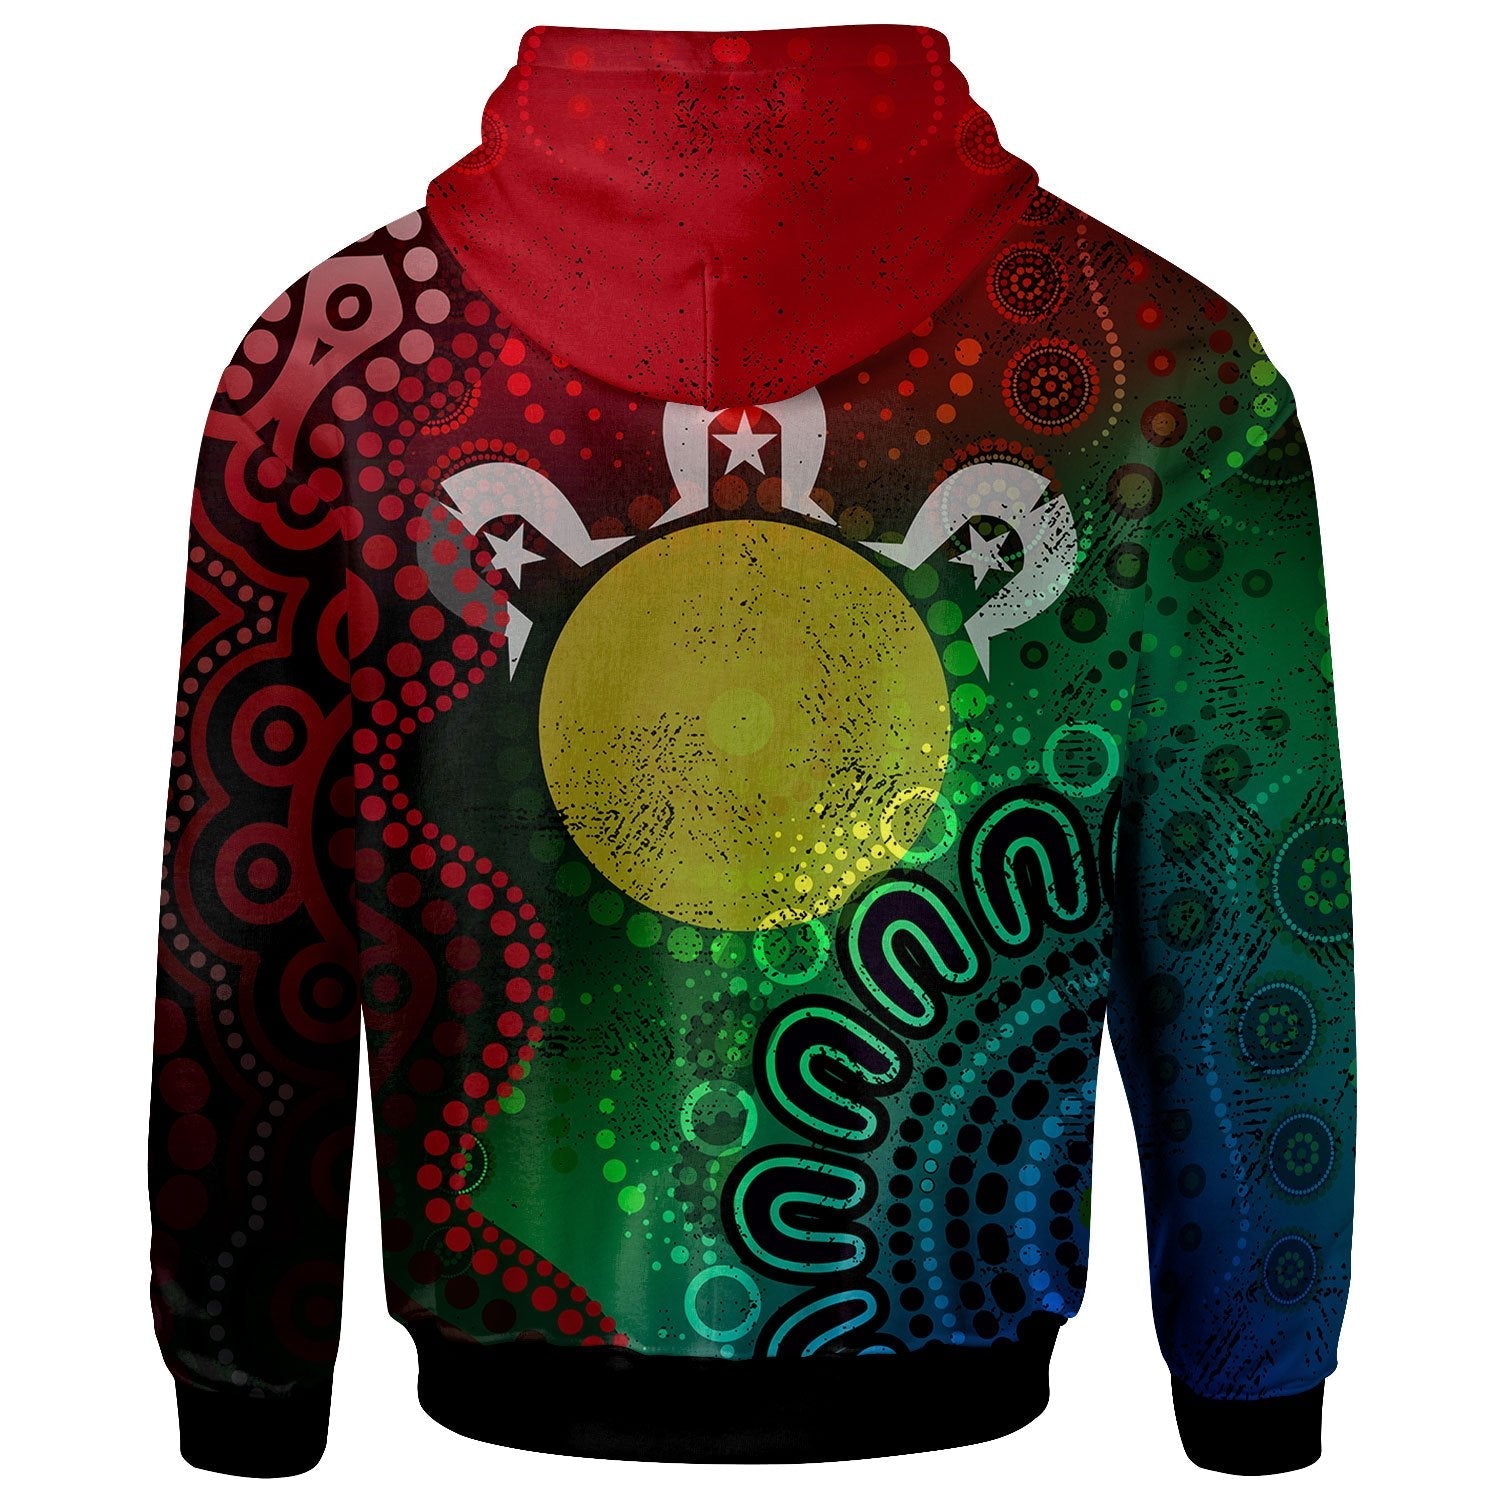 naidoc-week-zip-up-hoodie-inspiration-of-indigenous-art